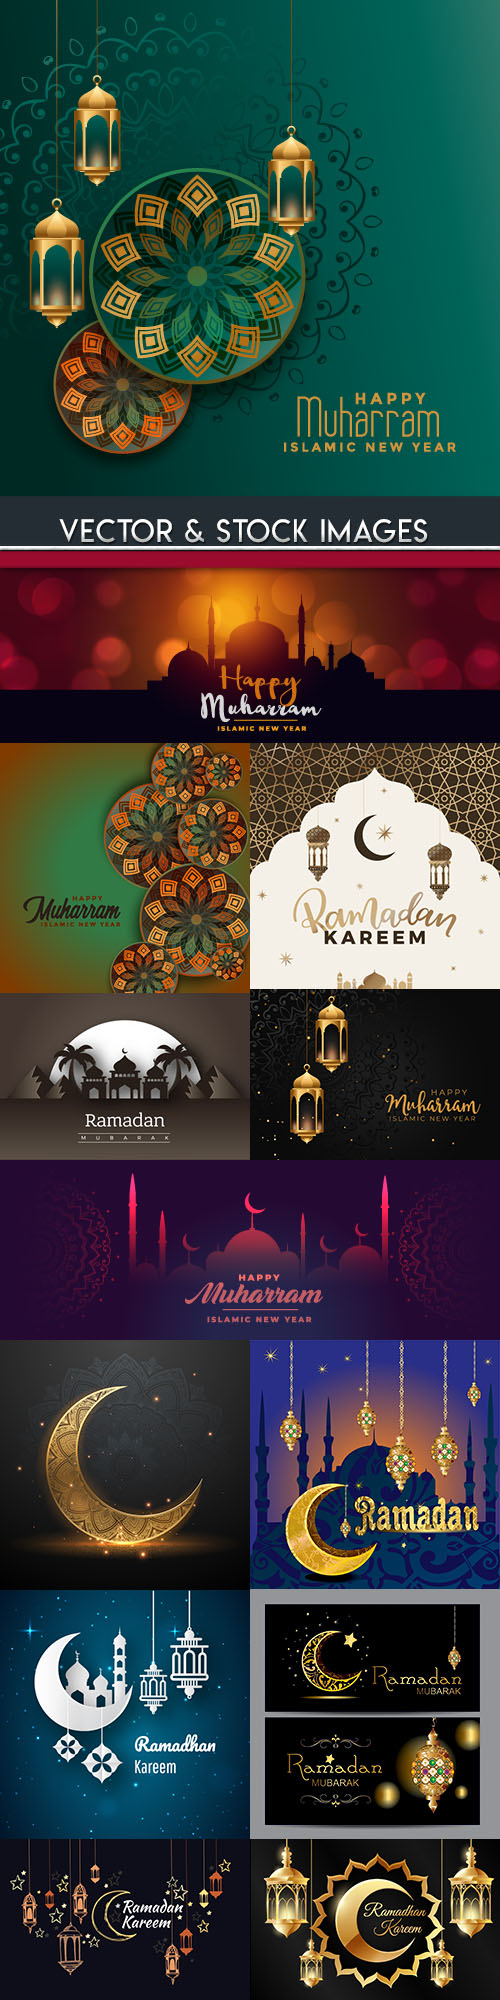 Ramadan Kareem Islamic culture collection illustrations 16